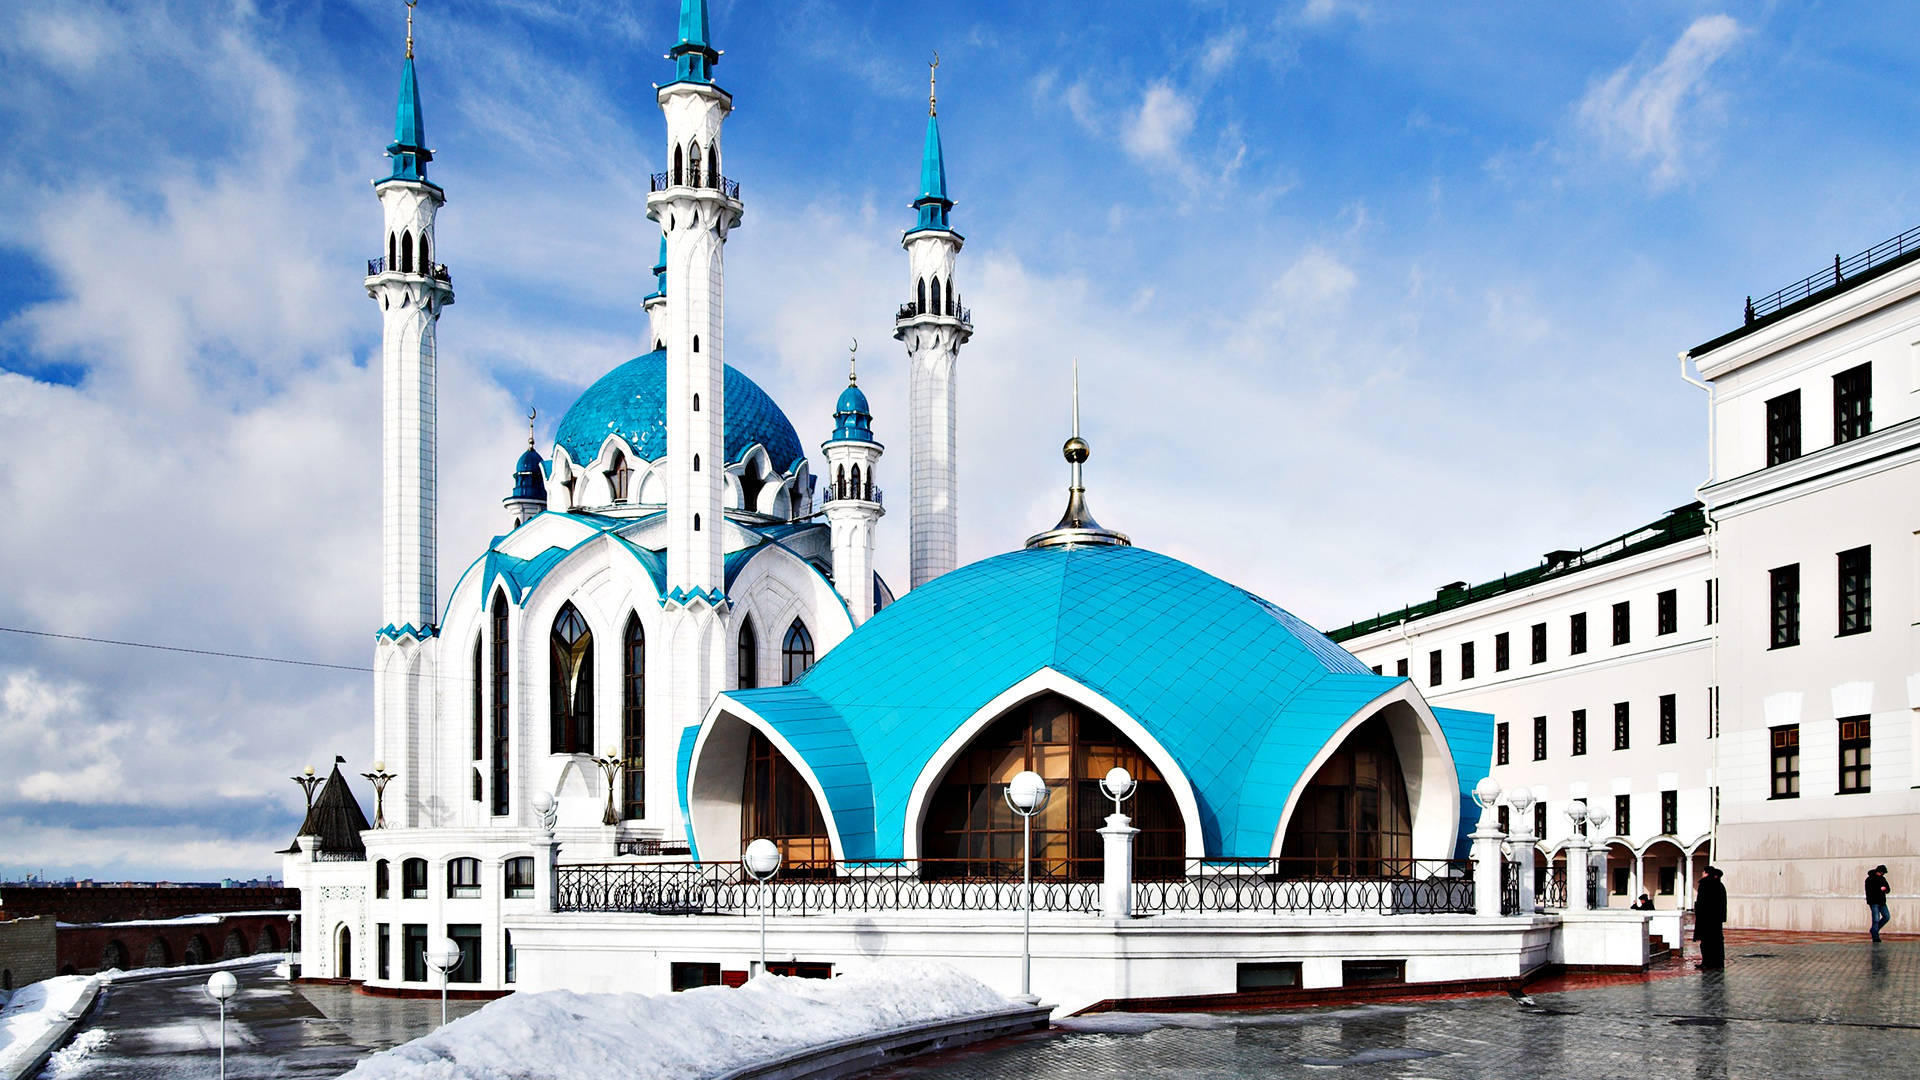 Caption: Majestic View Of Kul Sharif Mosque In Kazan